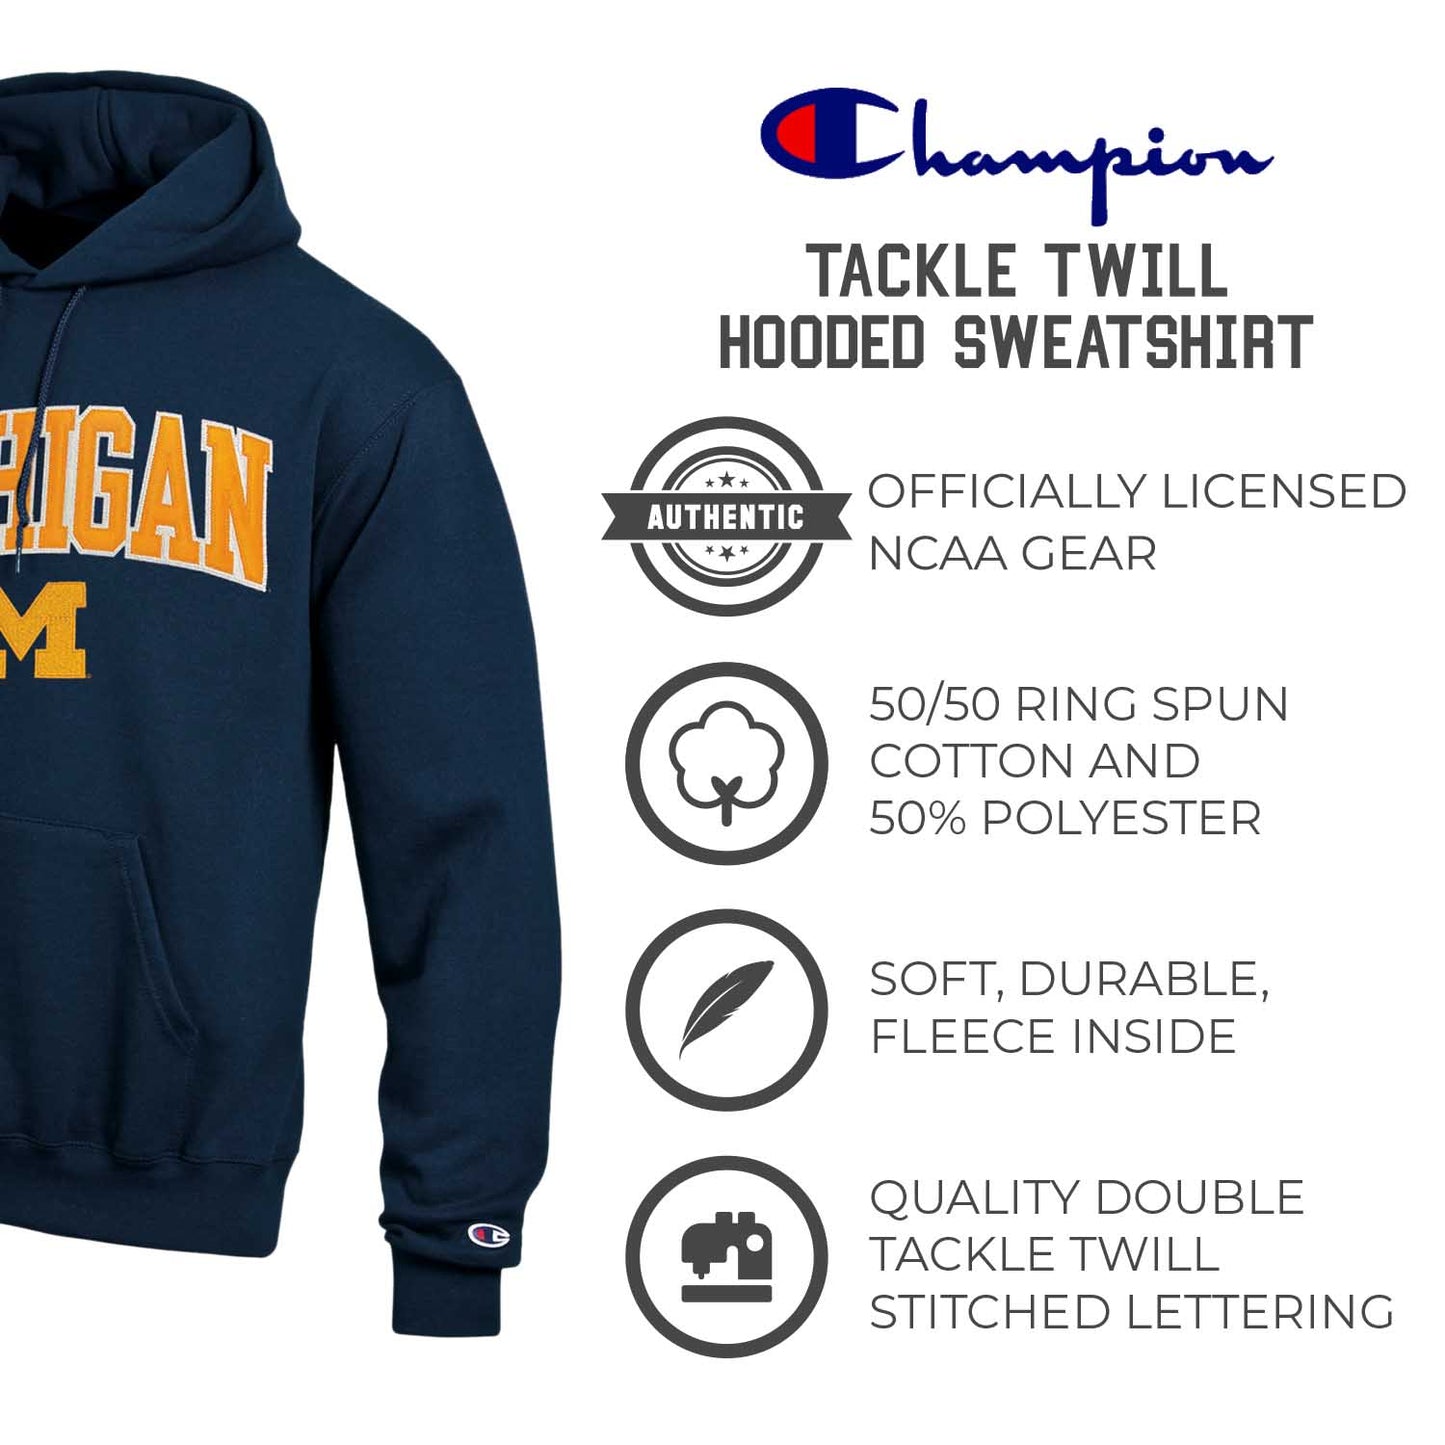 Michigan Wolverines Champion Adult Tackle Twill Hooded Sweatshirt - Navy